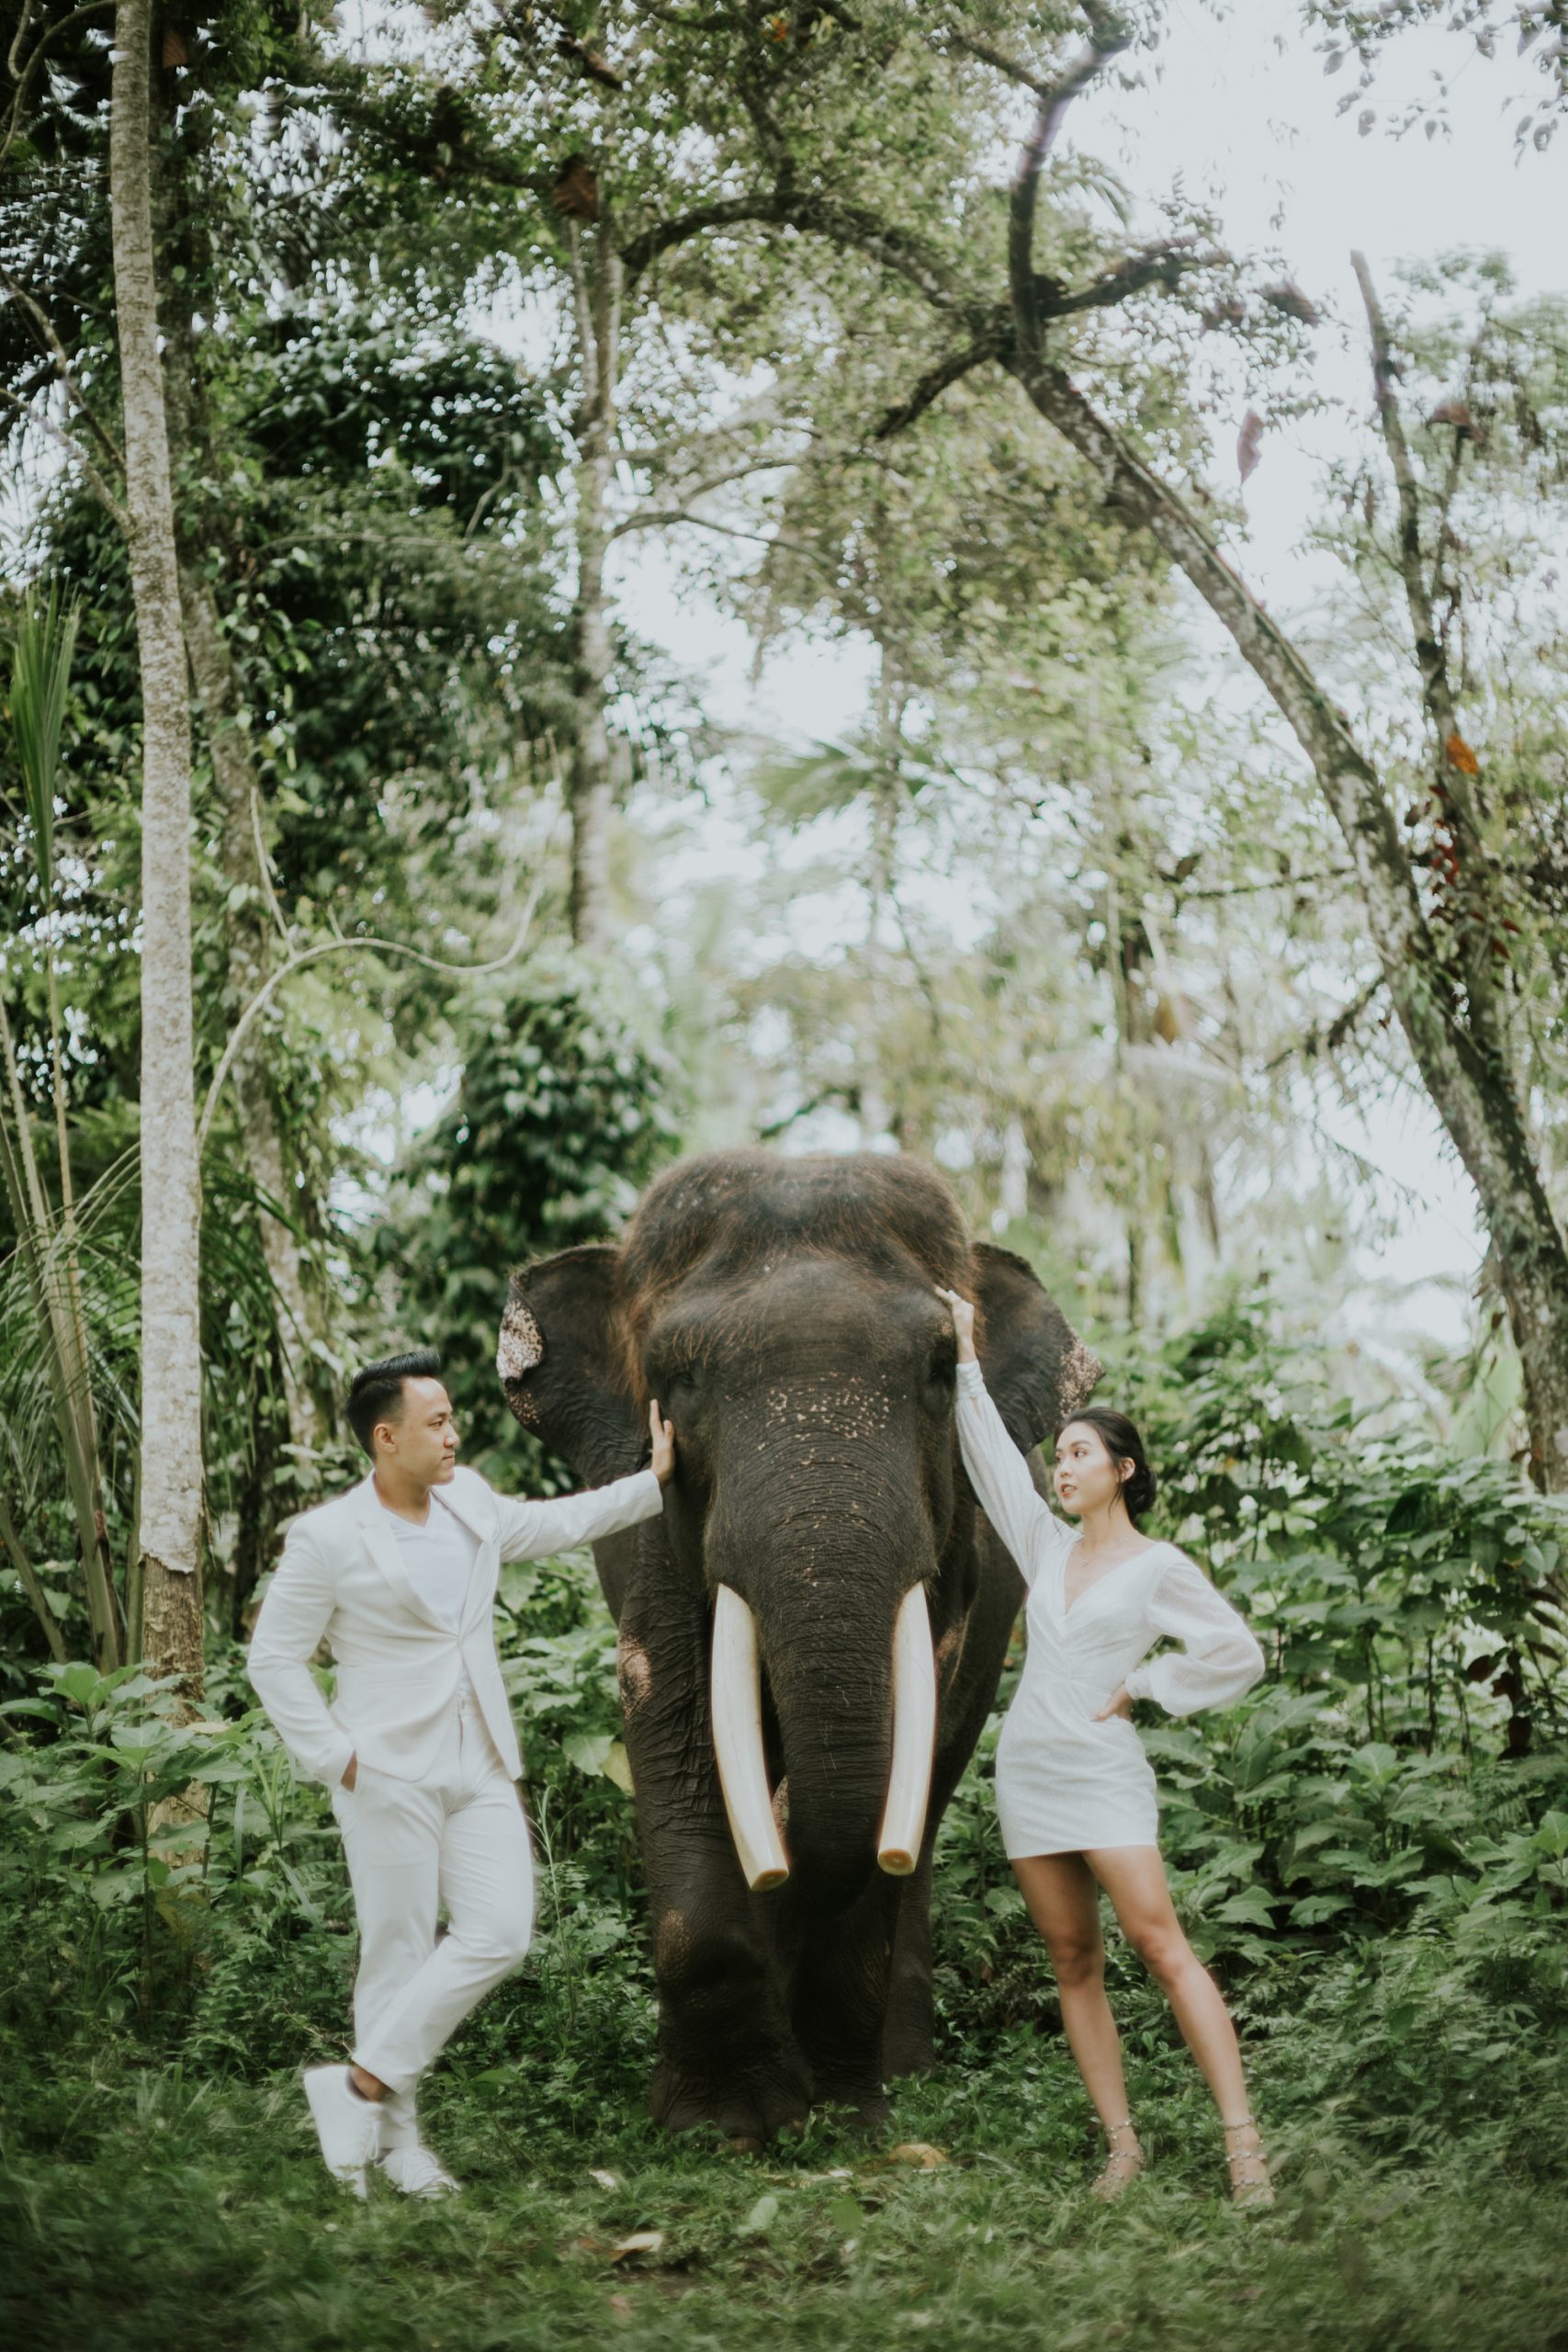 Bali prewedding with elephant